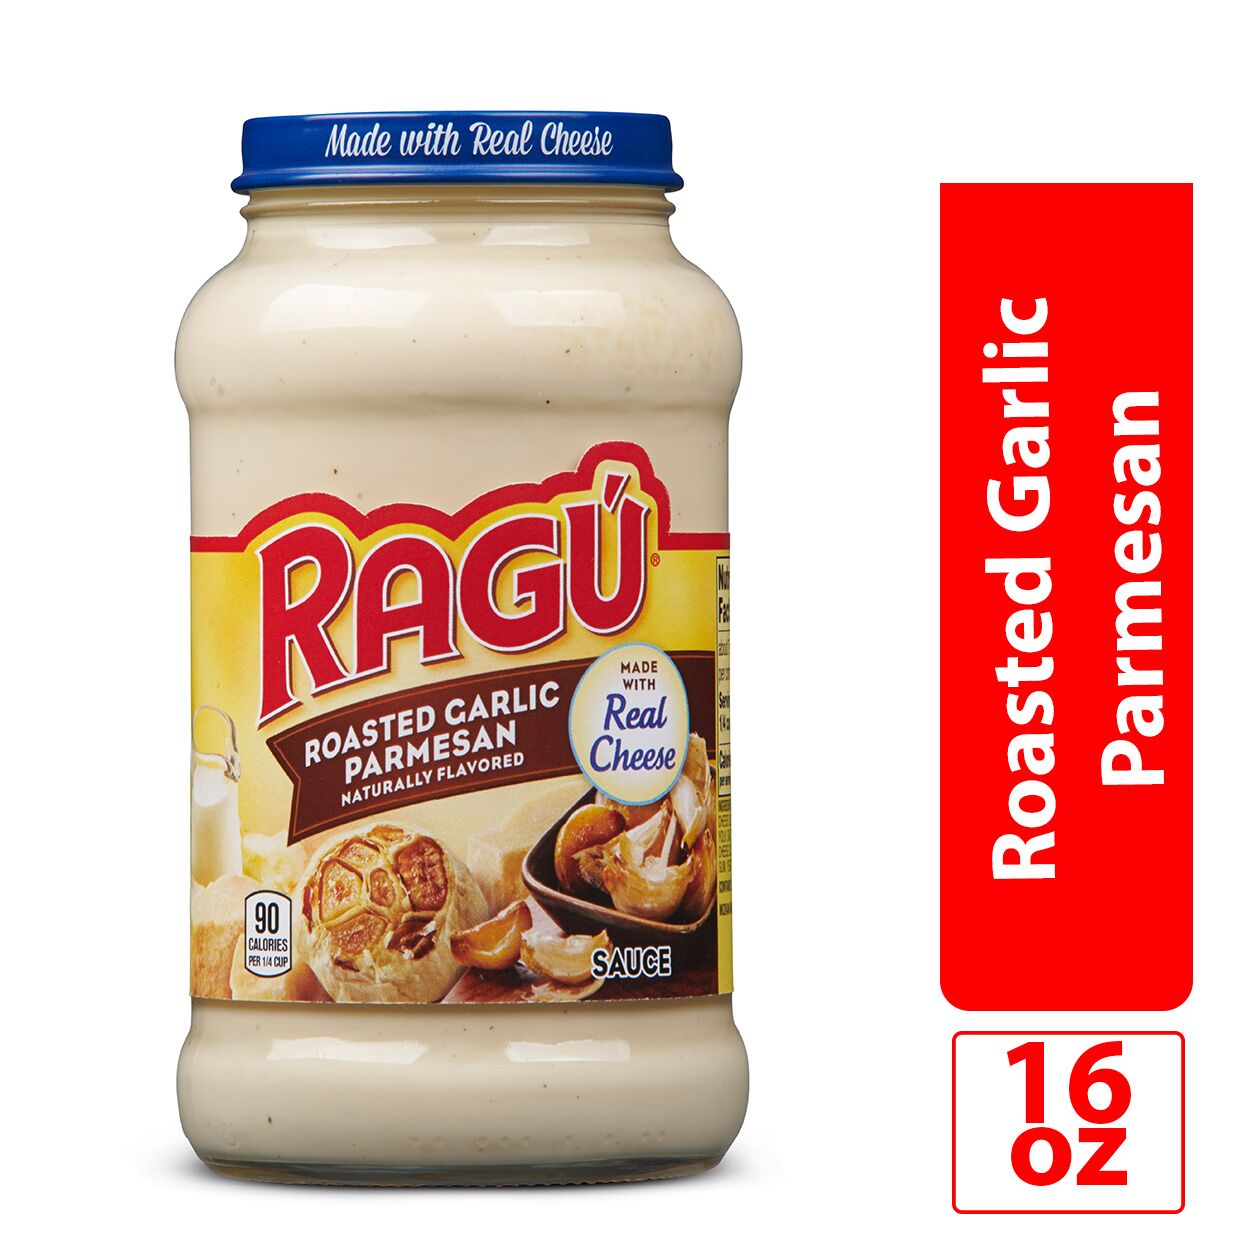 Ragu Roasted Garlic Parmesan Sauce, 16 oz.